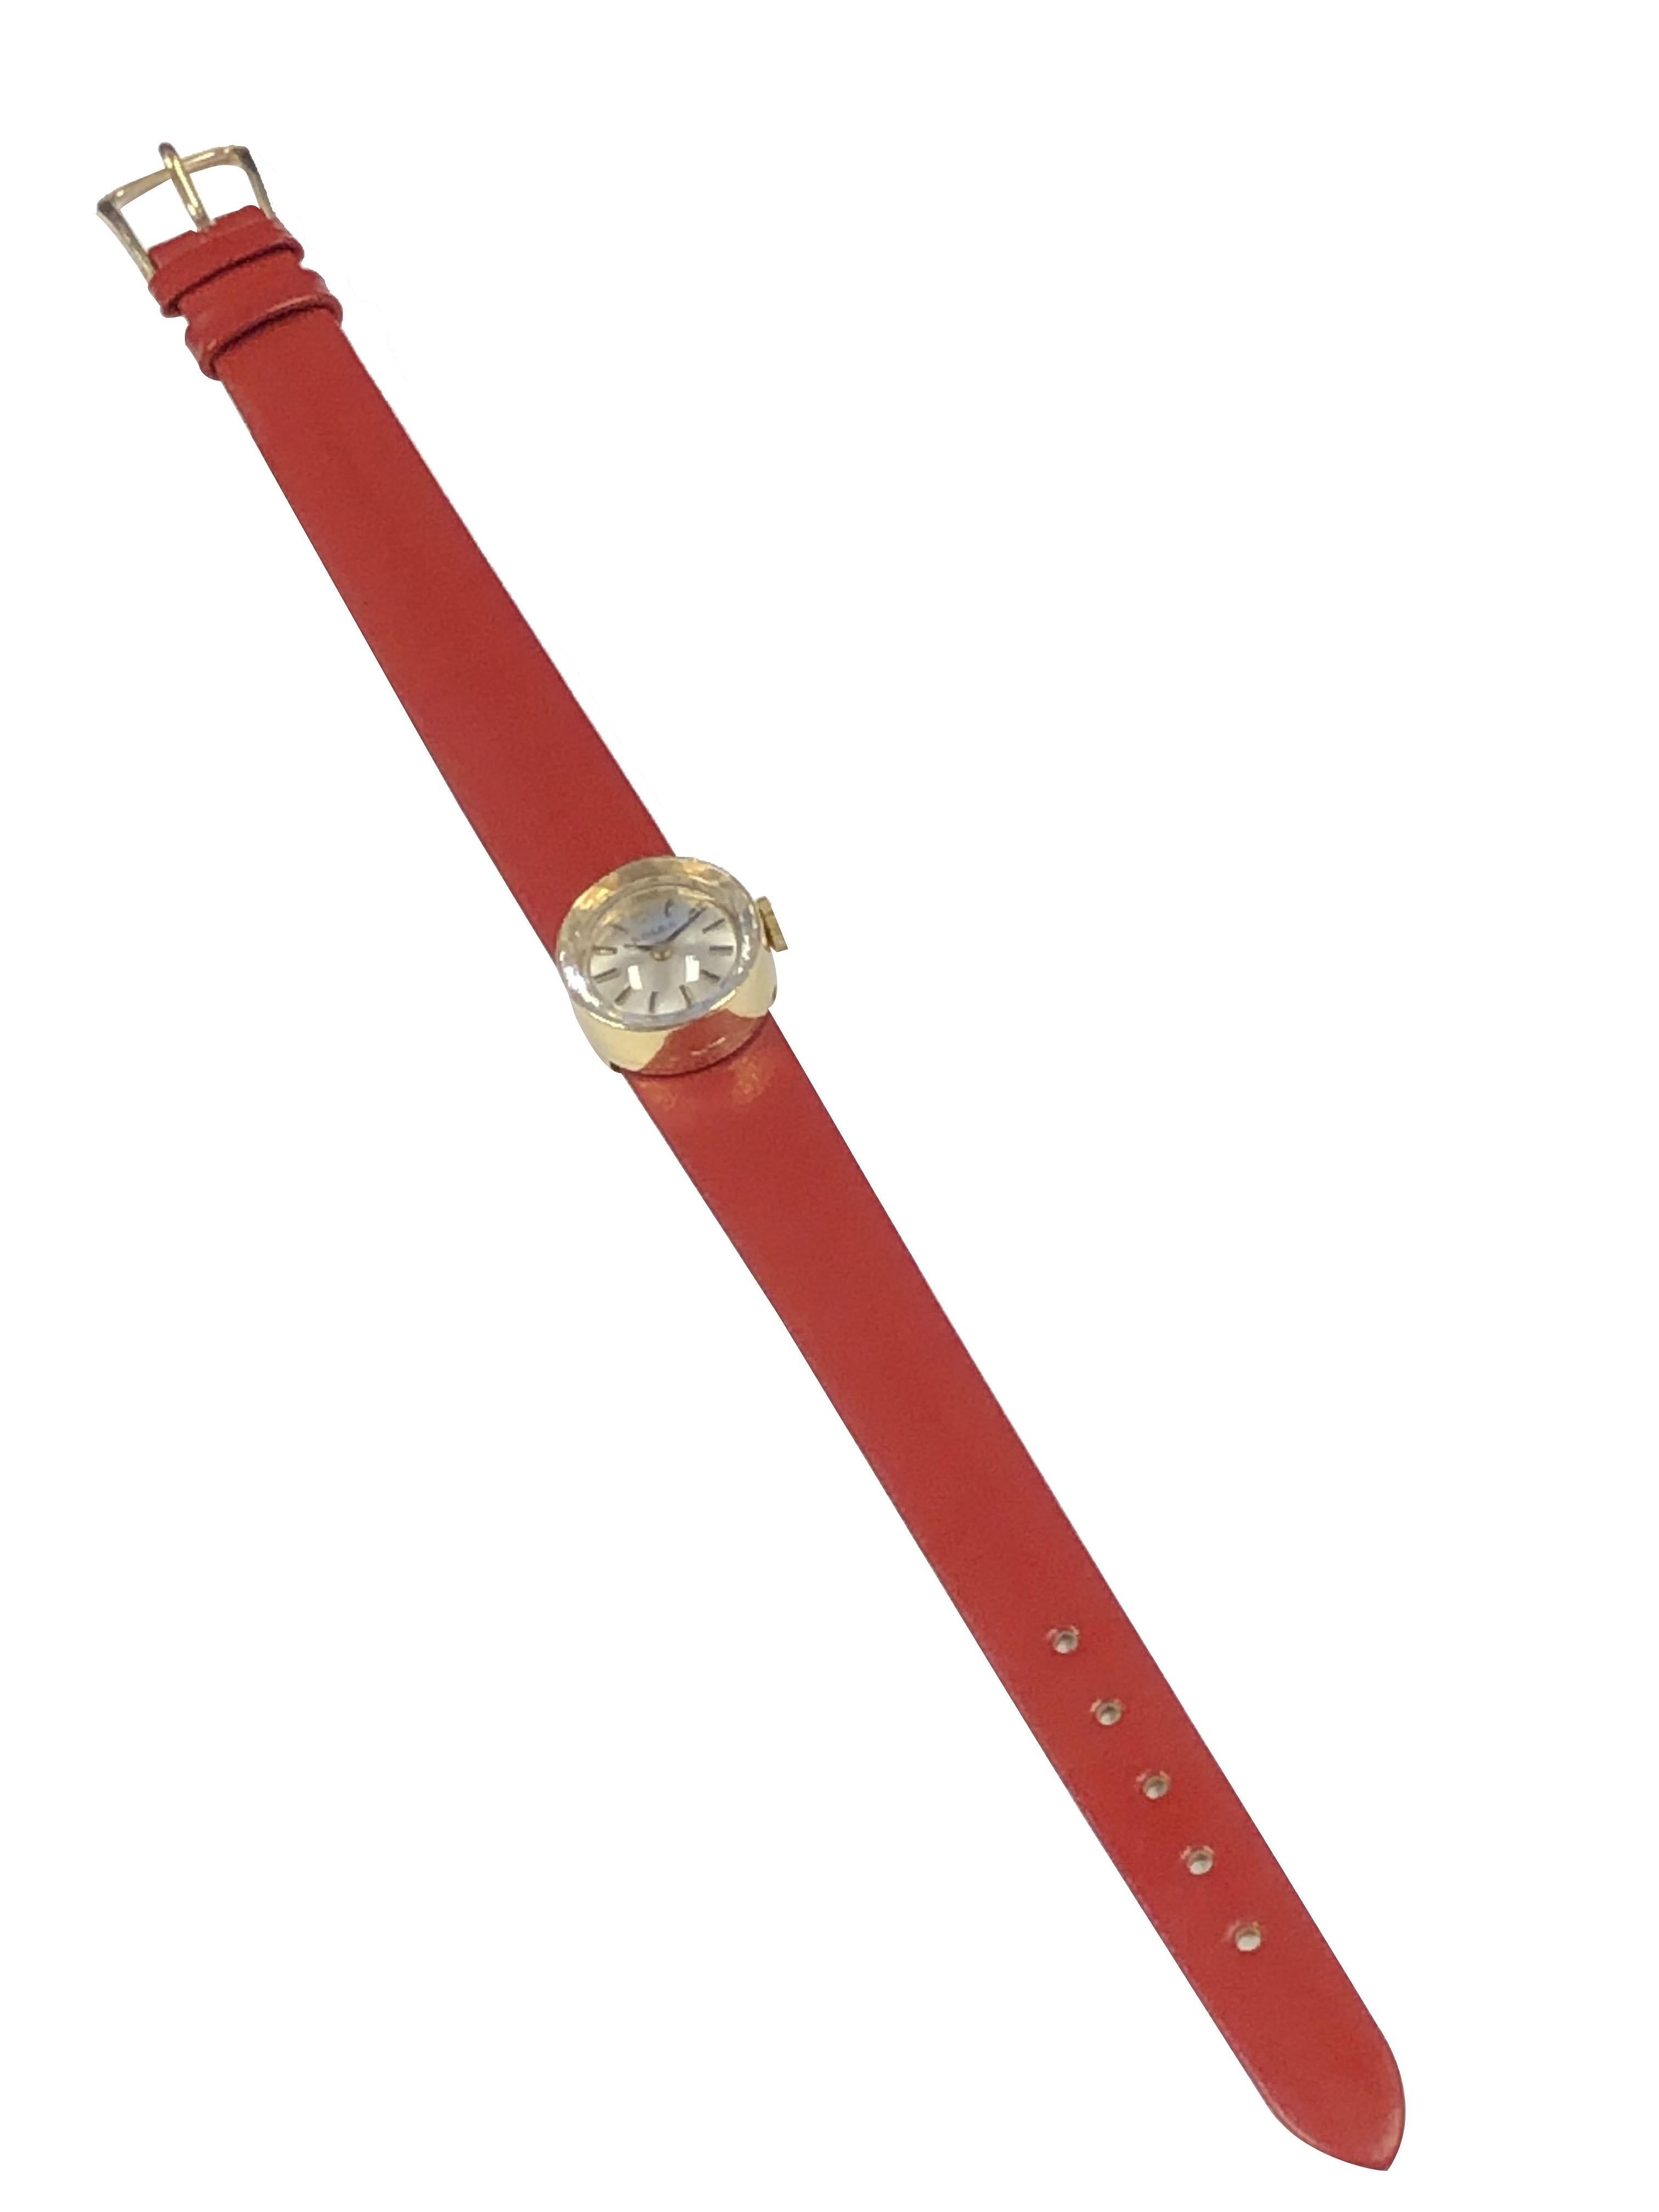 Rolex Chameleon Vintage Ladies Interchangeable Wrist Watch All Complete 1